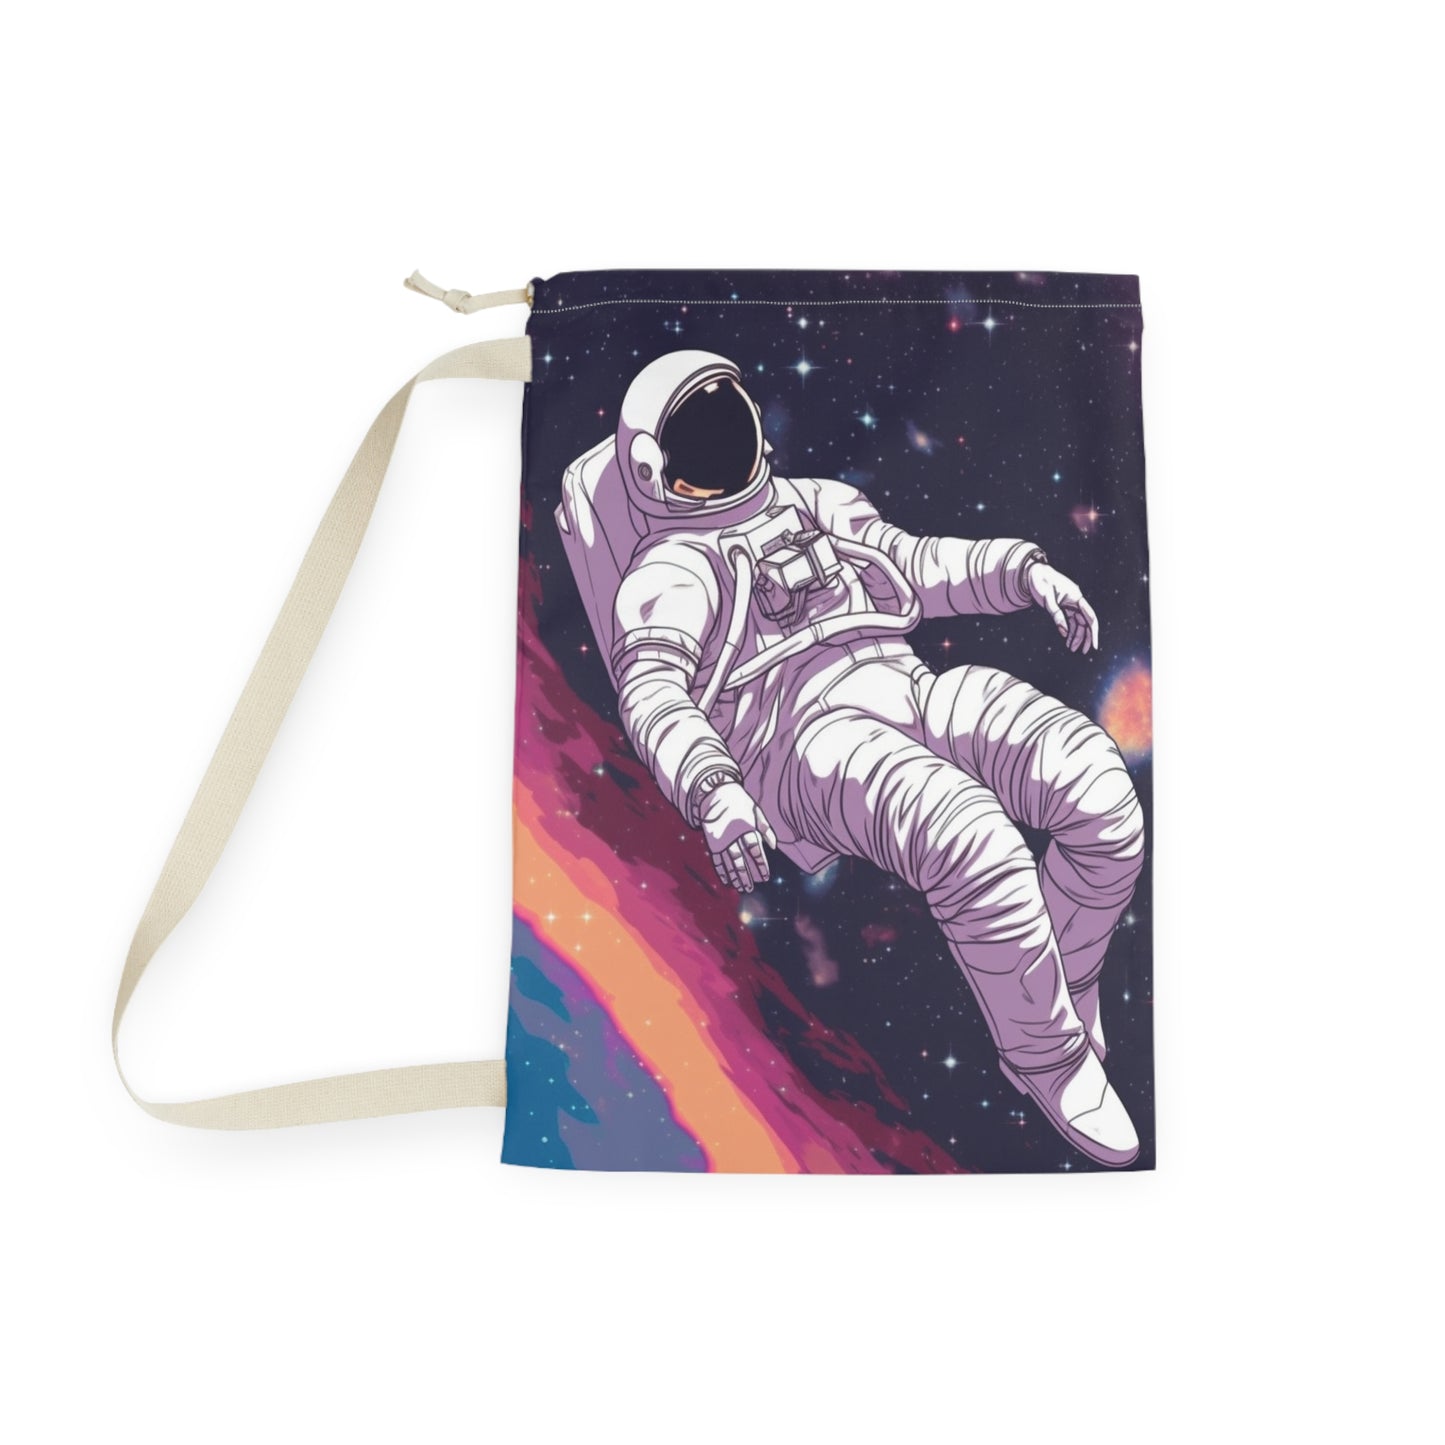 Astro Pioneer - Star-filled Galaxy Illustration - Laundry Bag